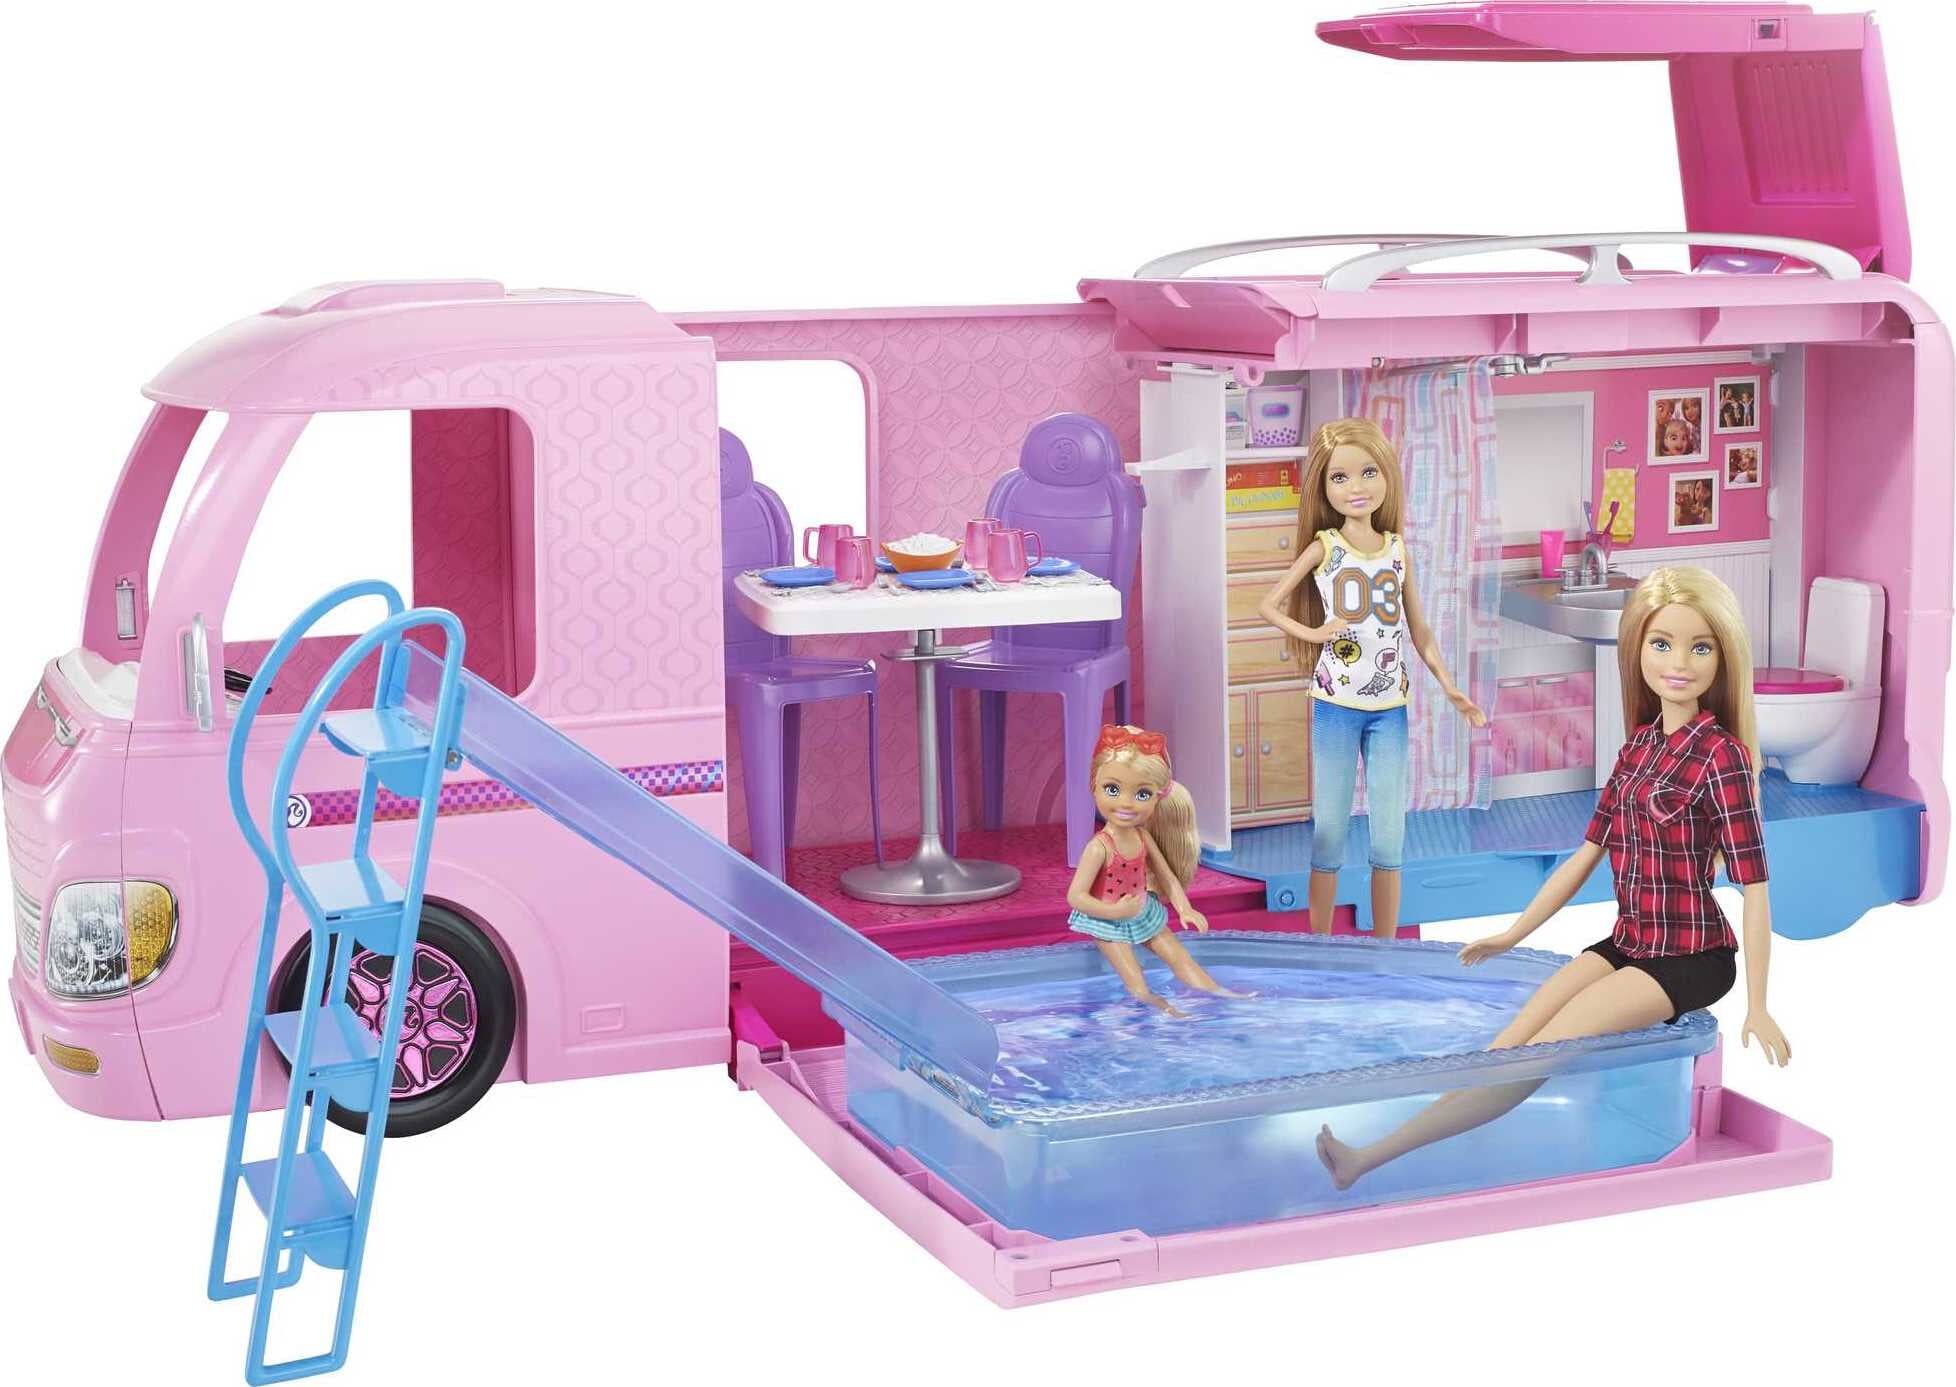 Barbie Camper, Doll with Accessories and Waterslide, Dream Camper - Walmart.com